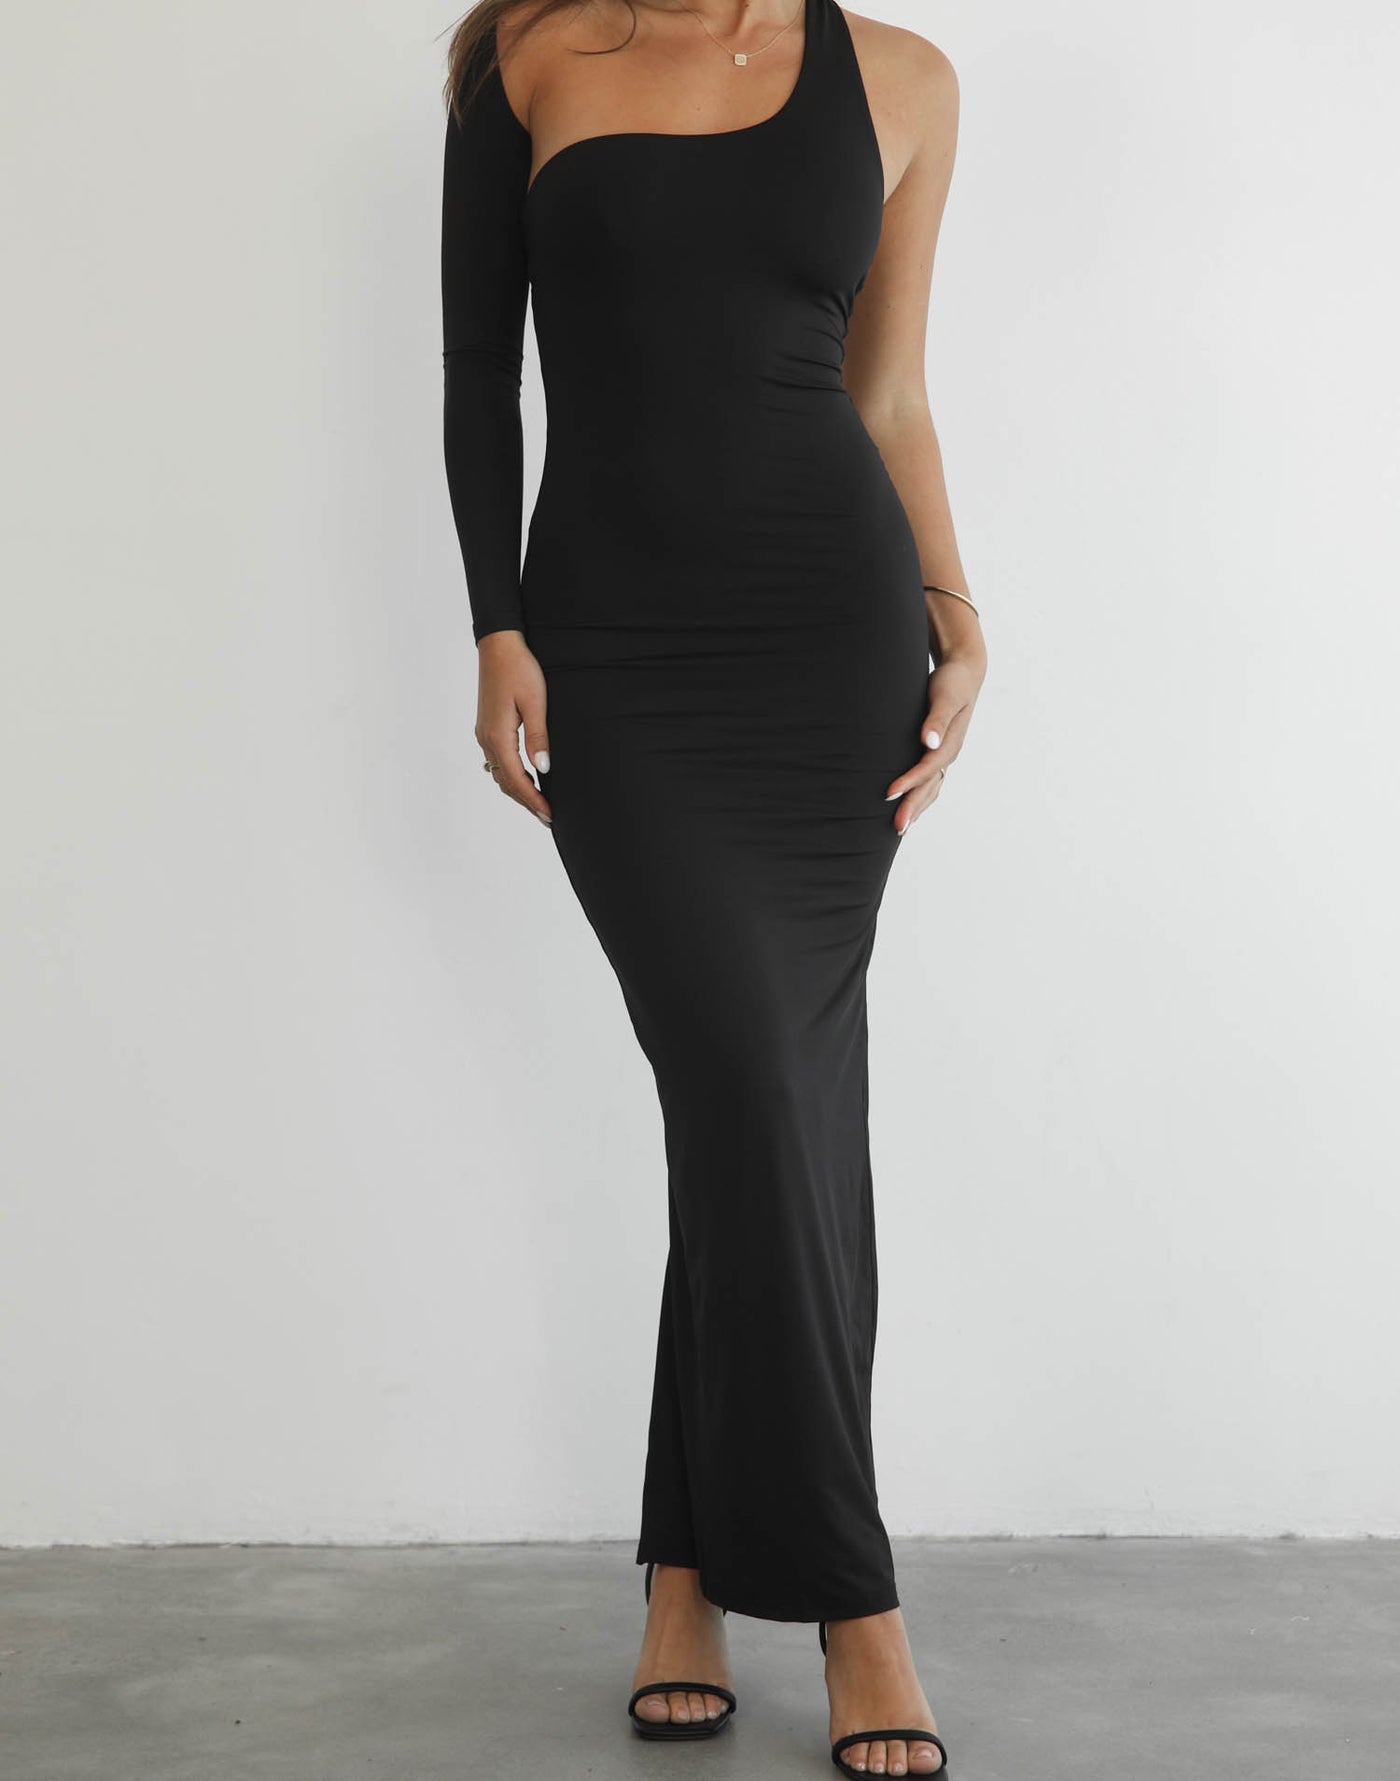 Ryleigh Maxi Dress (Black) - One Sleeve Maxi Dress - Women's Dress - Charcoal Clothing